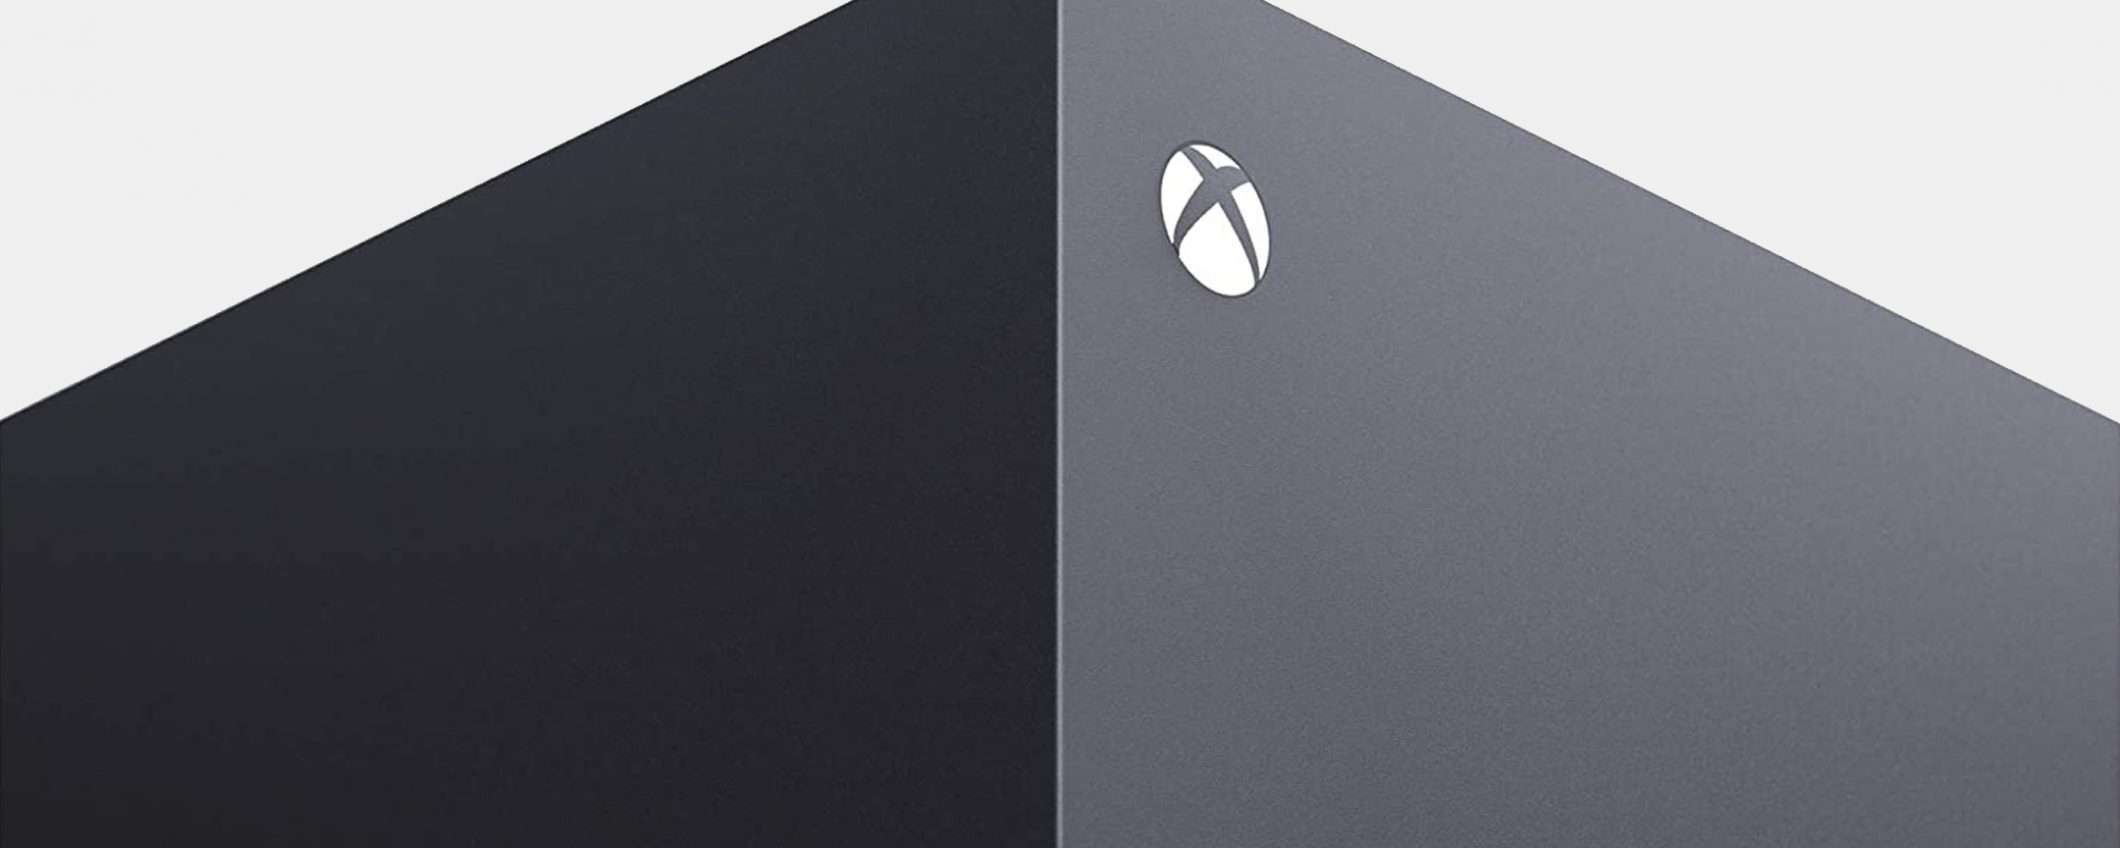 Xbox Serie X su Unieuro, Drop 13 dicembre (update)